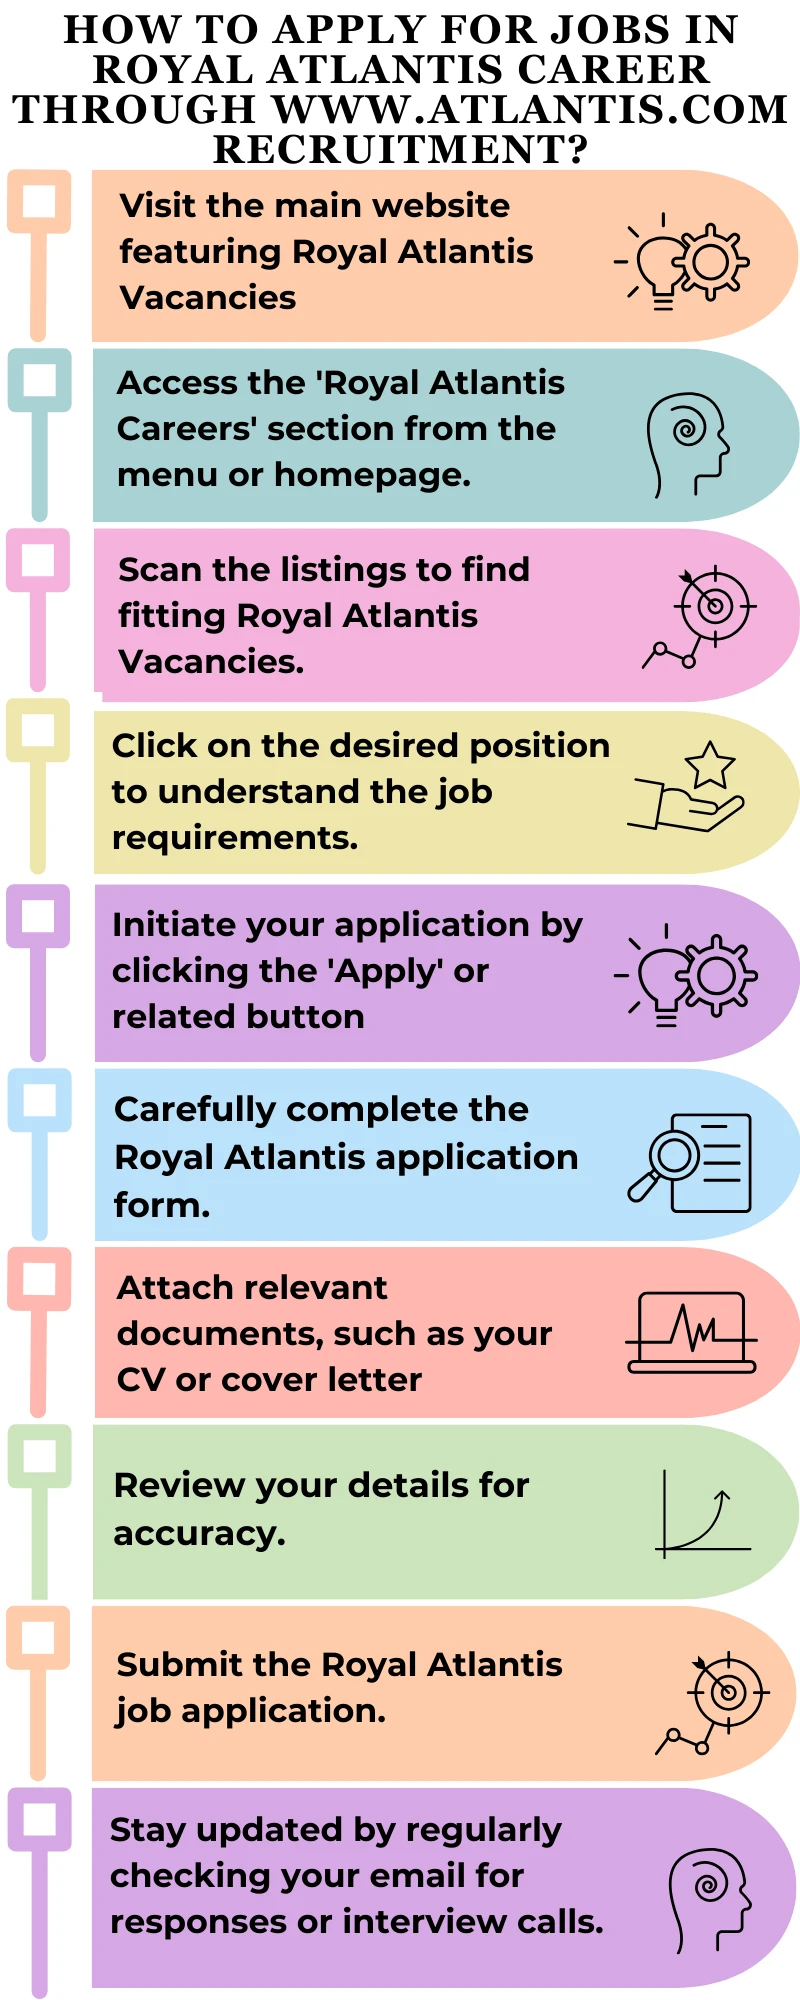 How to Apply for Jobs in Royal Atlantis Career through www.atlantis.com recruitment?